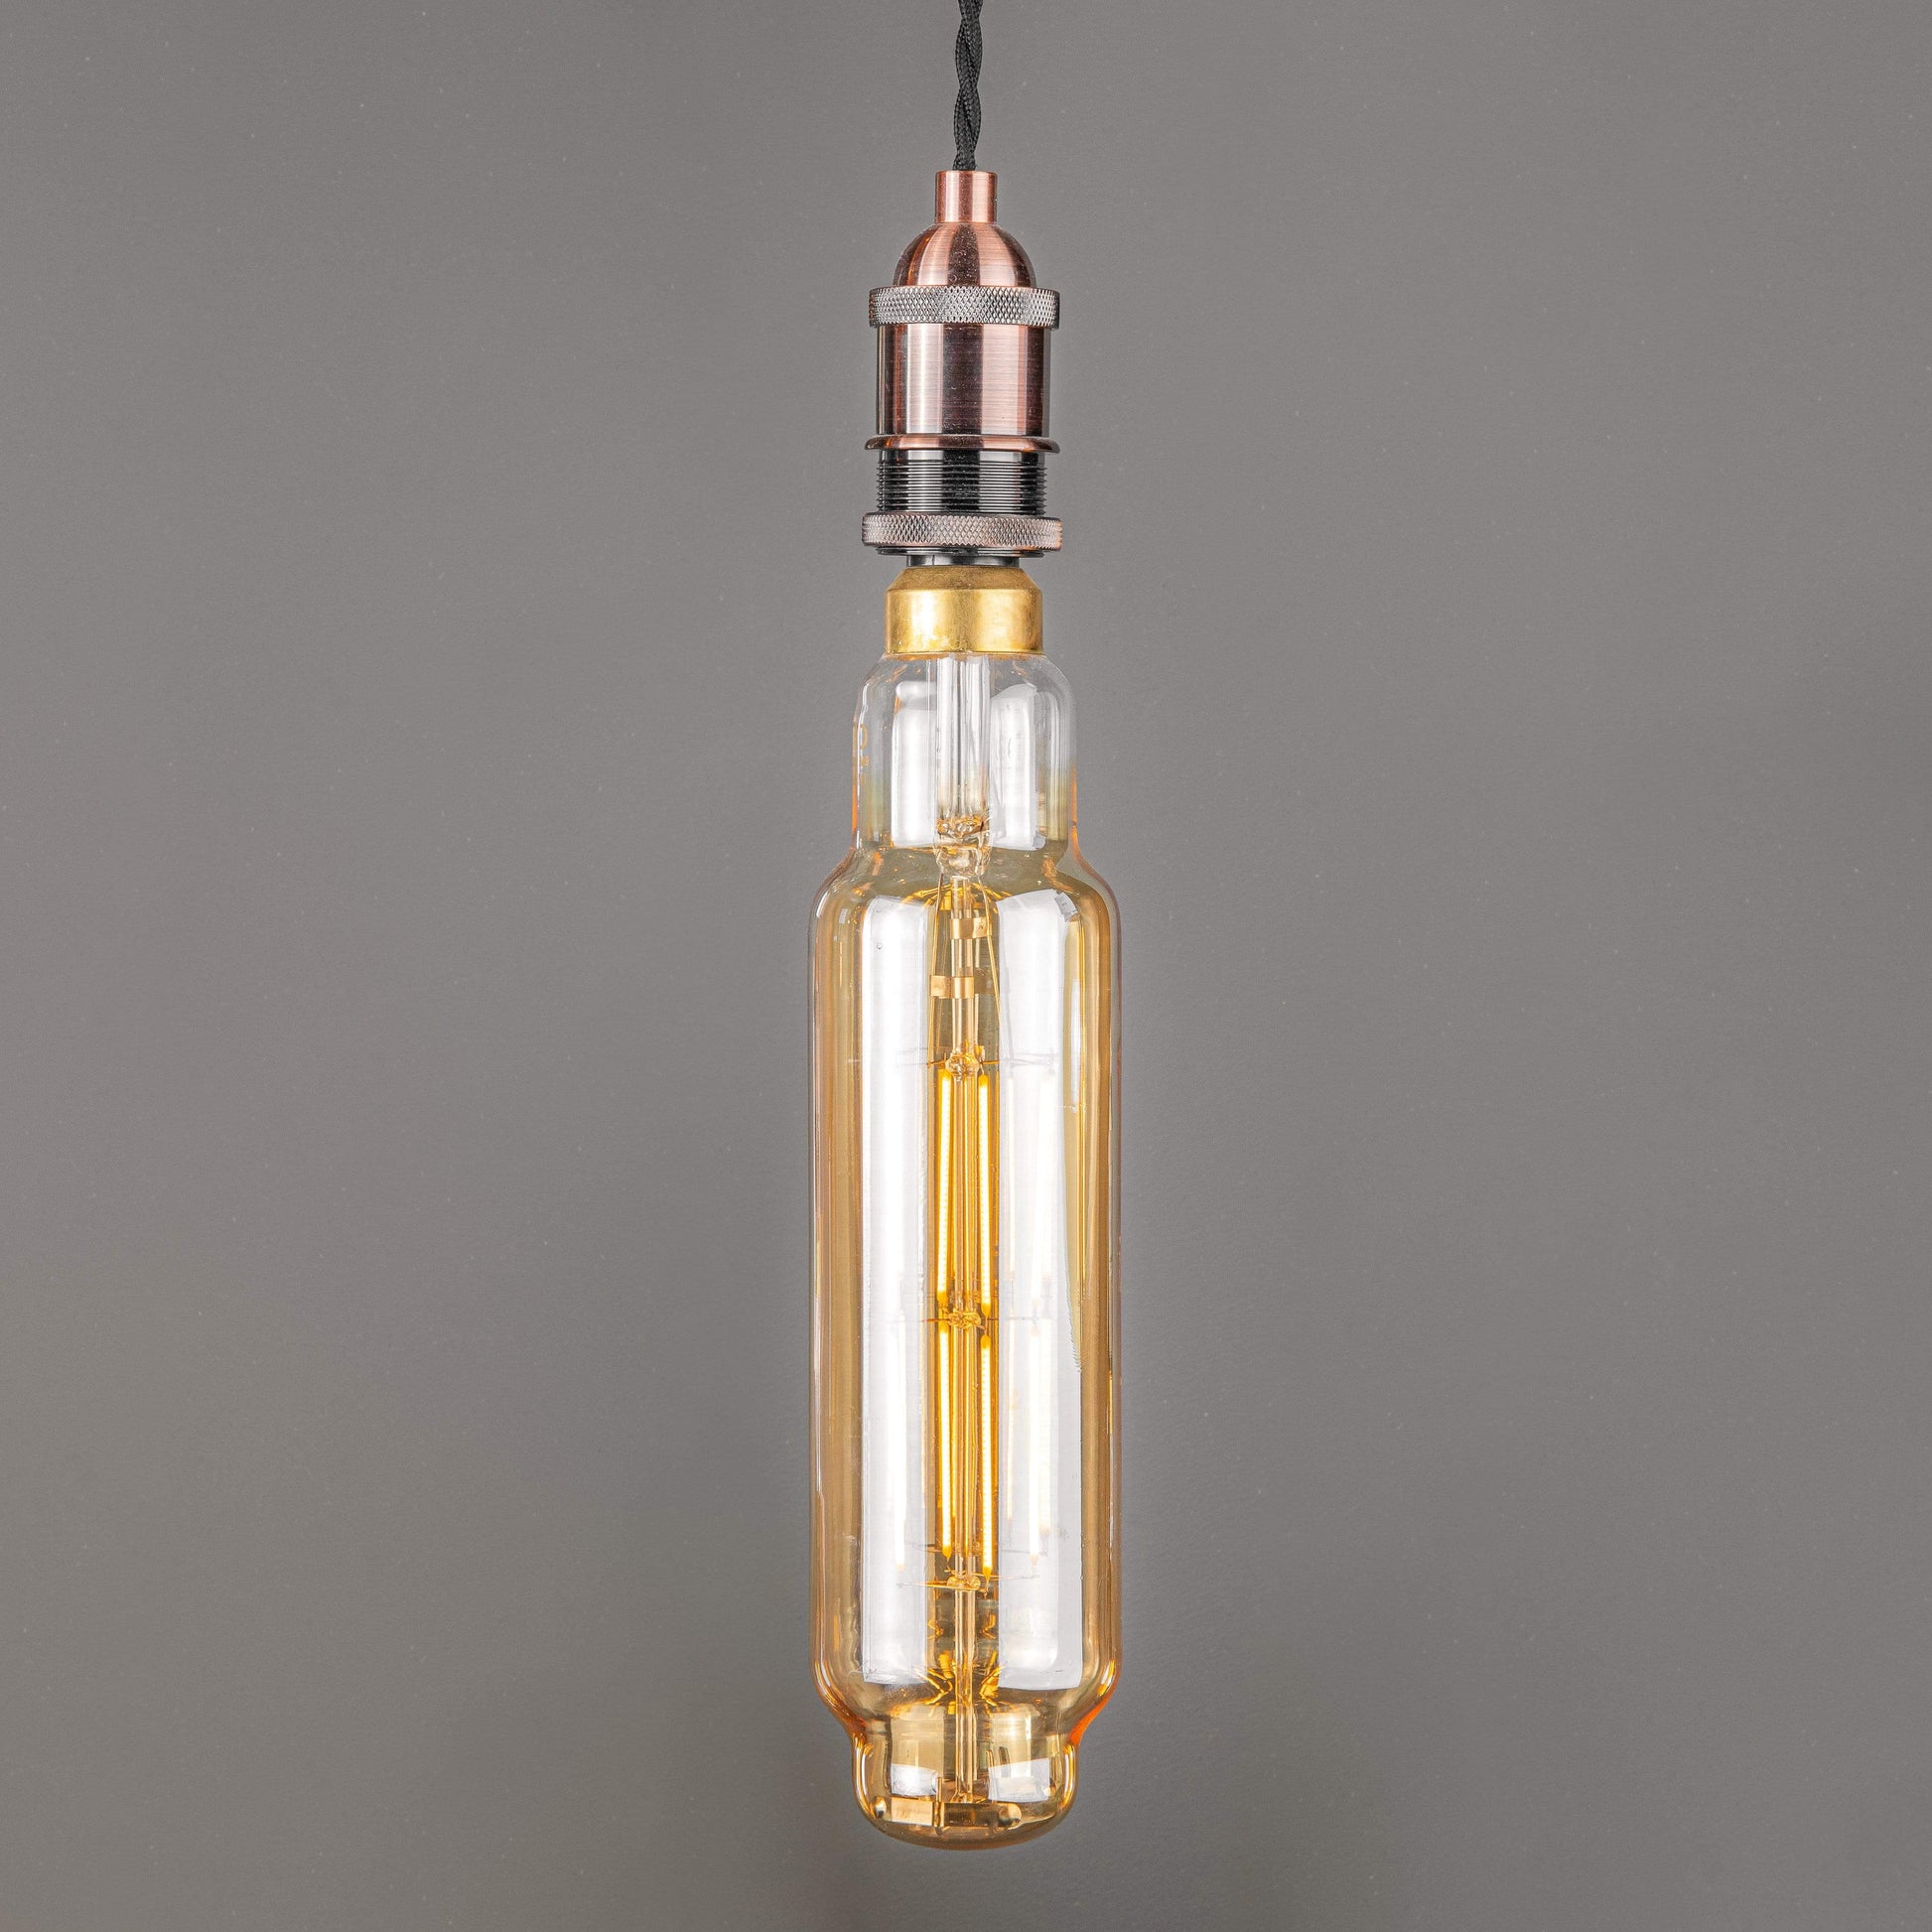 Lights  -  Forum 6W Led Oversized Vintage Filament Bulb T80 - E27  -  50151848